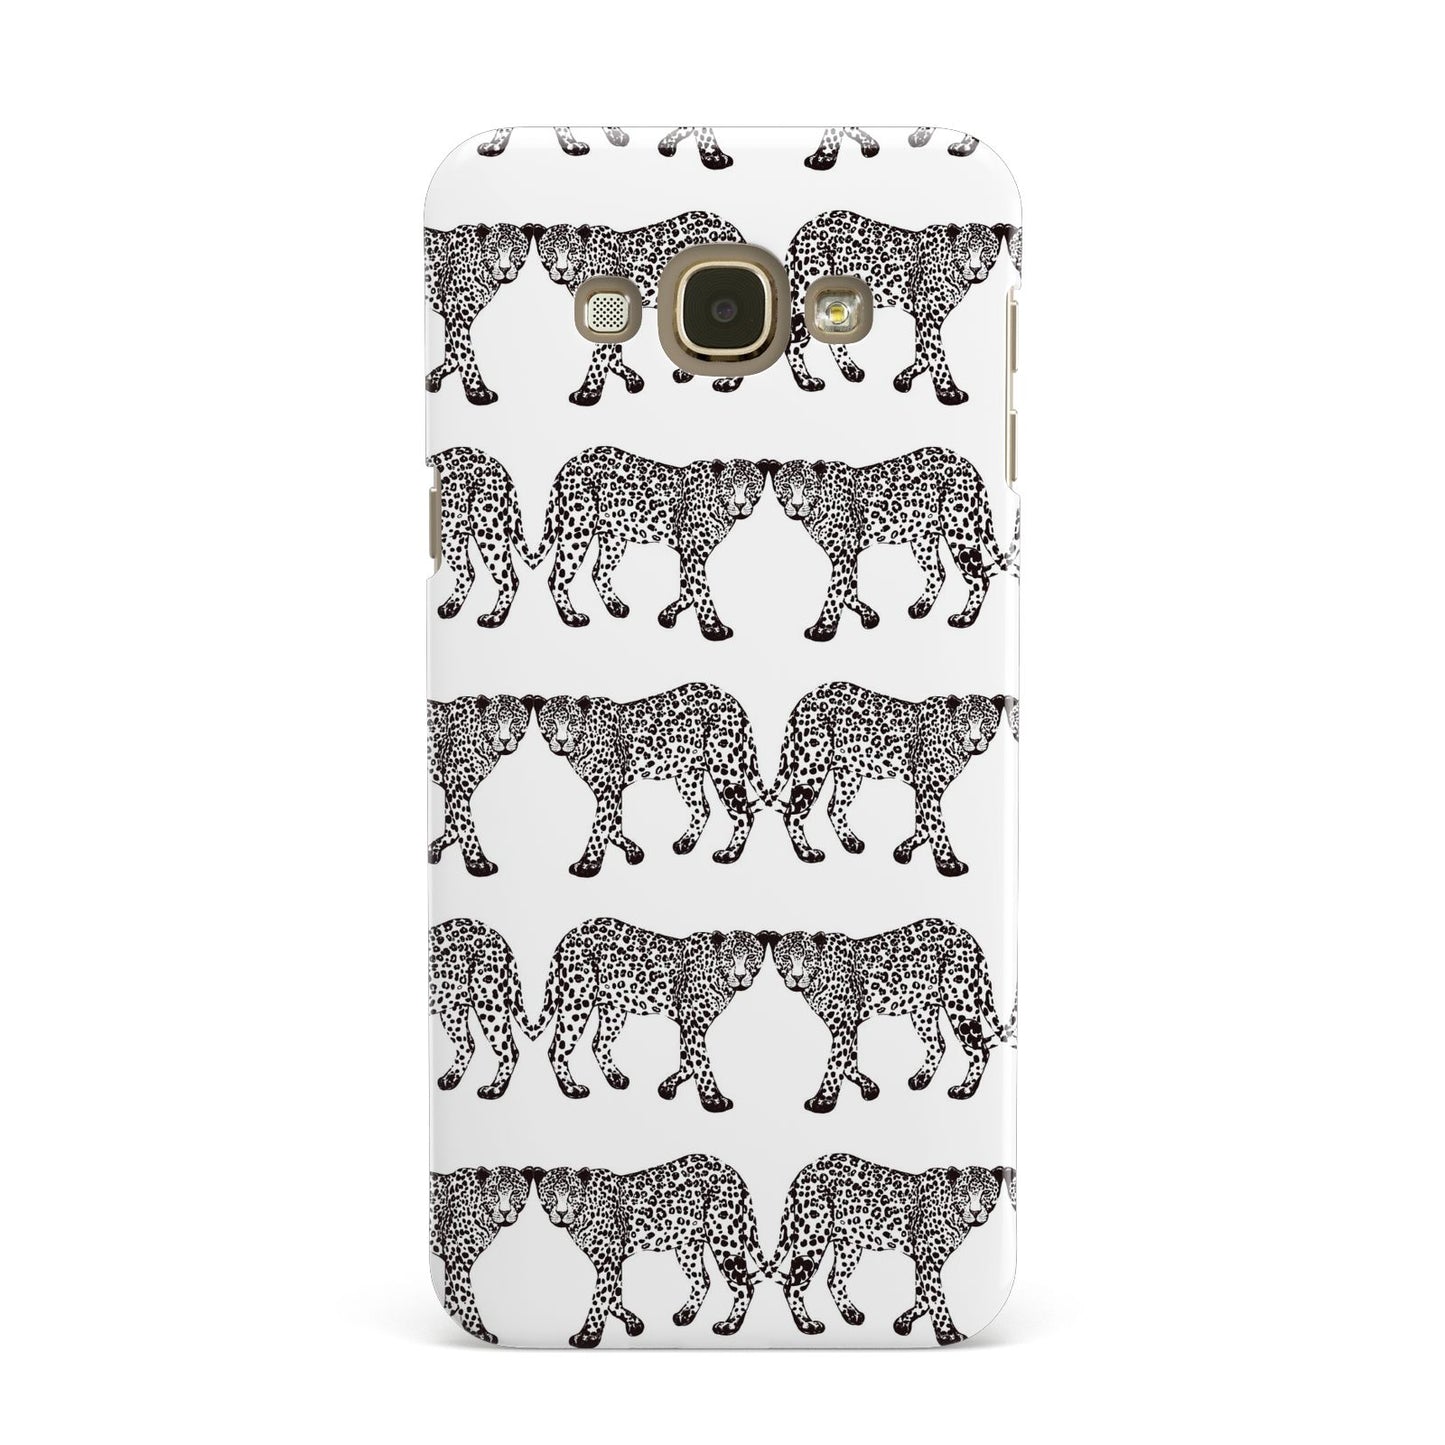 Monochrome Mirrored Leopard Print Samsung Galaxy A8 Case